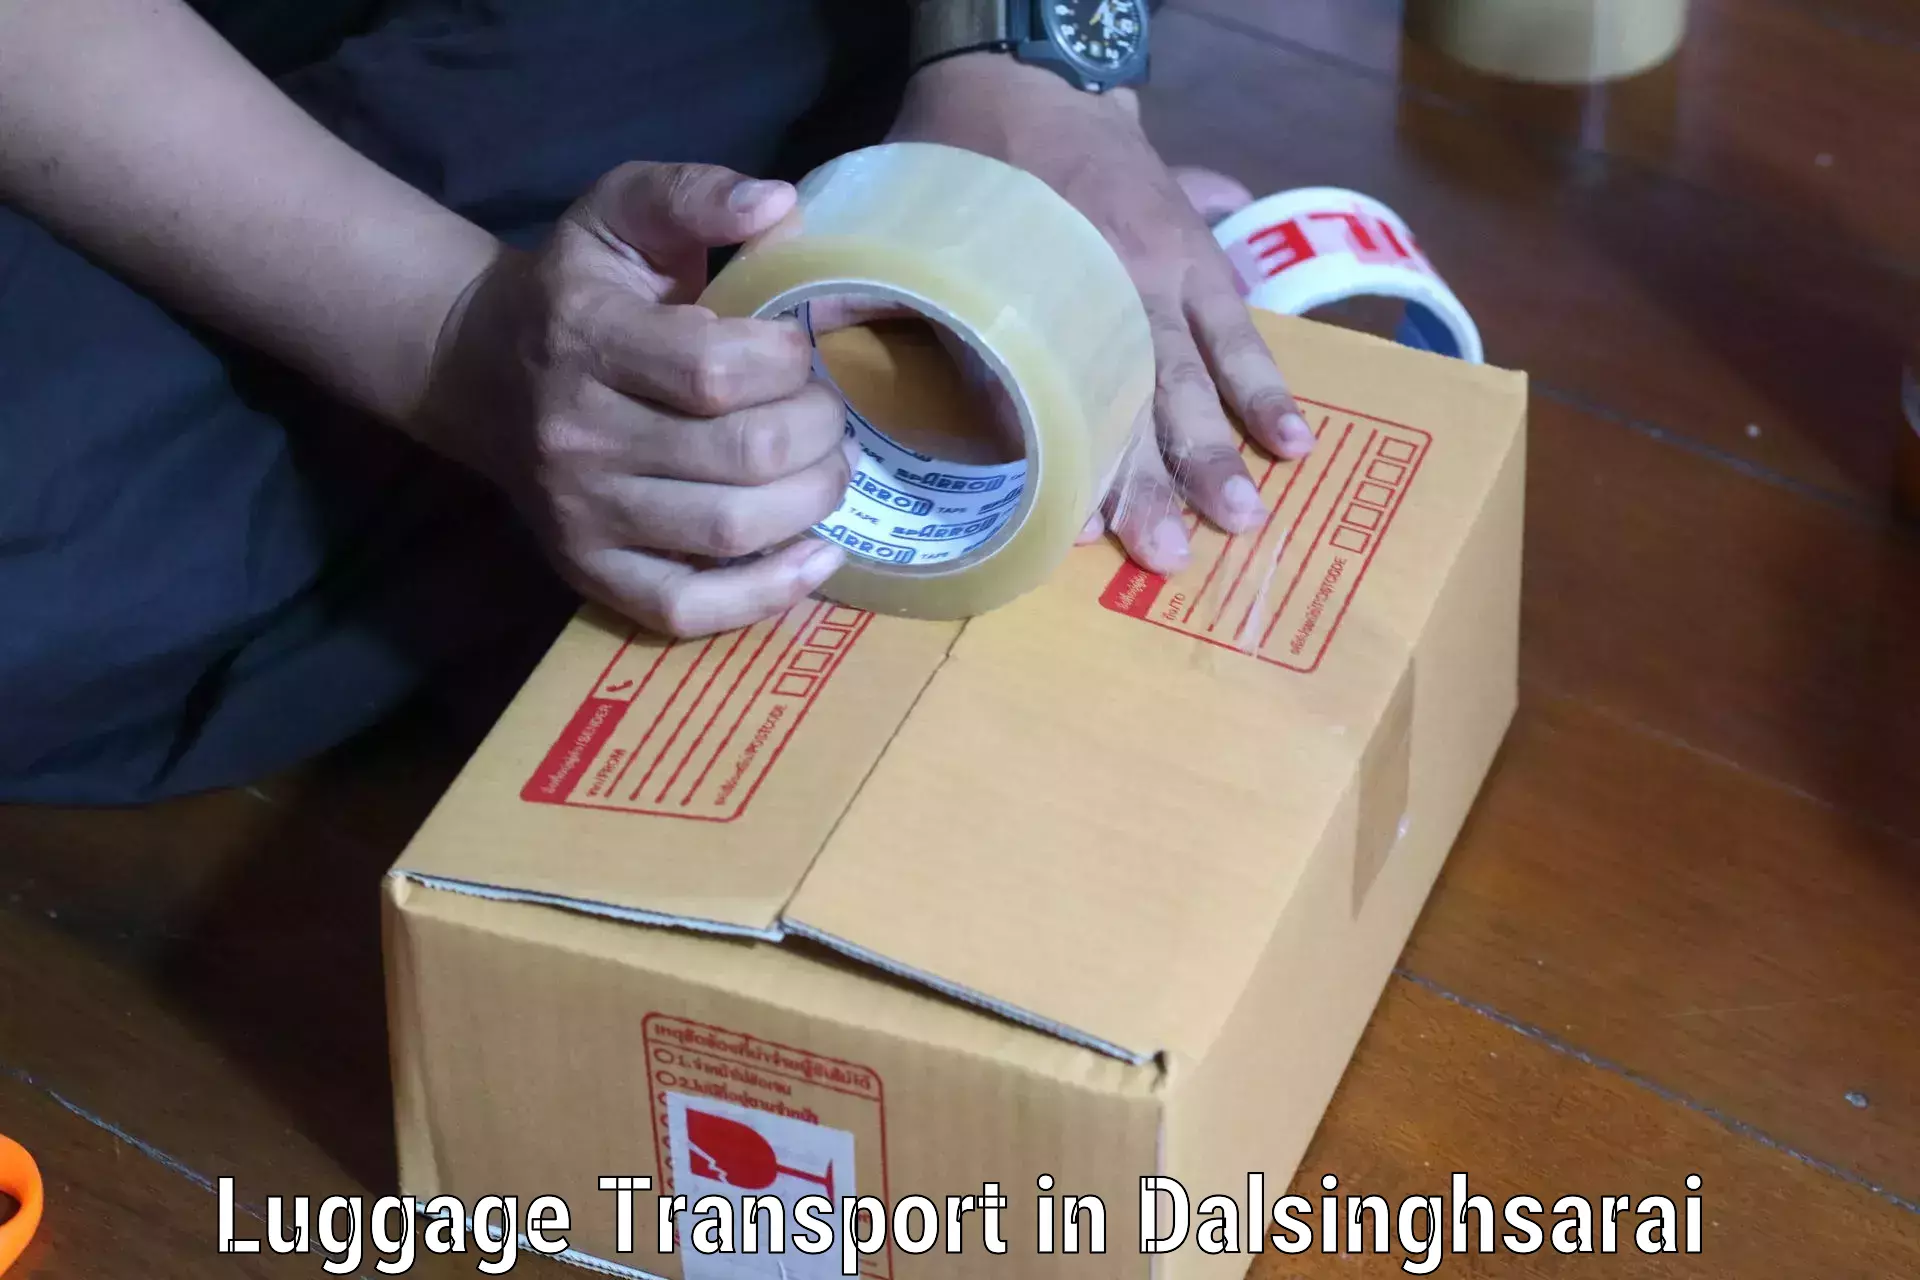 Baggage shipping advice in Dalsinghsarai